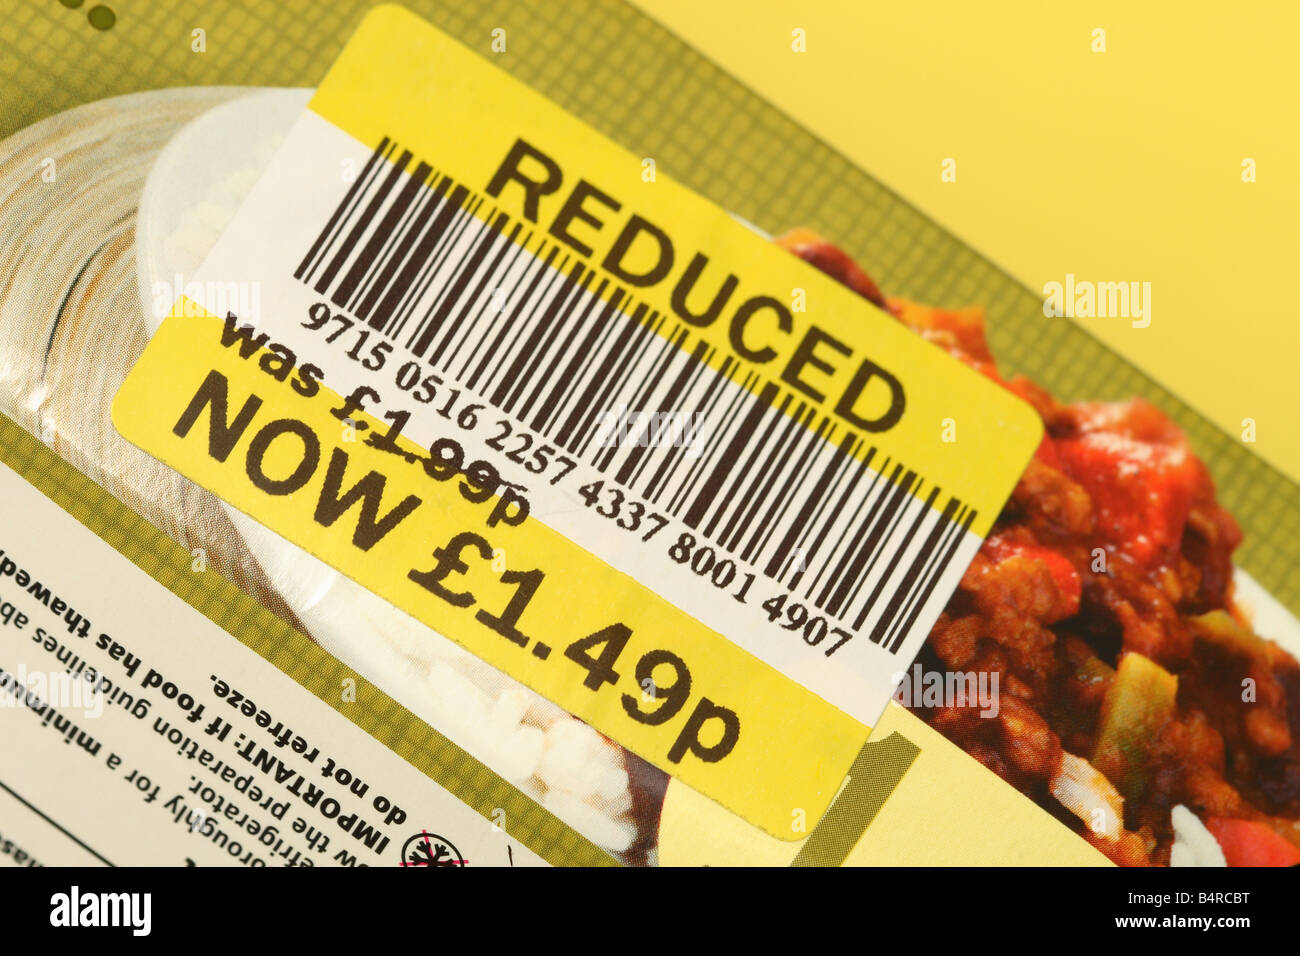 Reduced-price food bargains